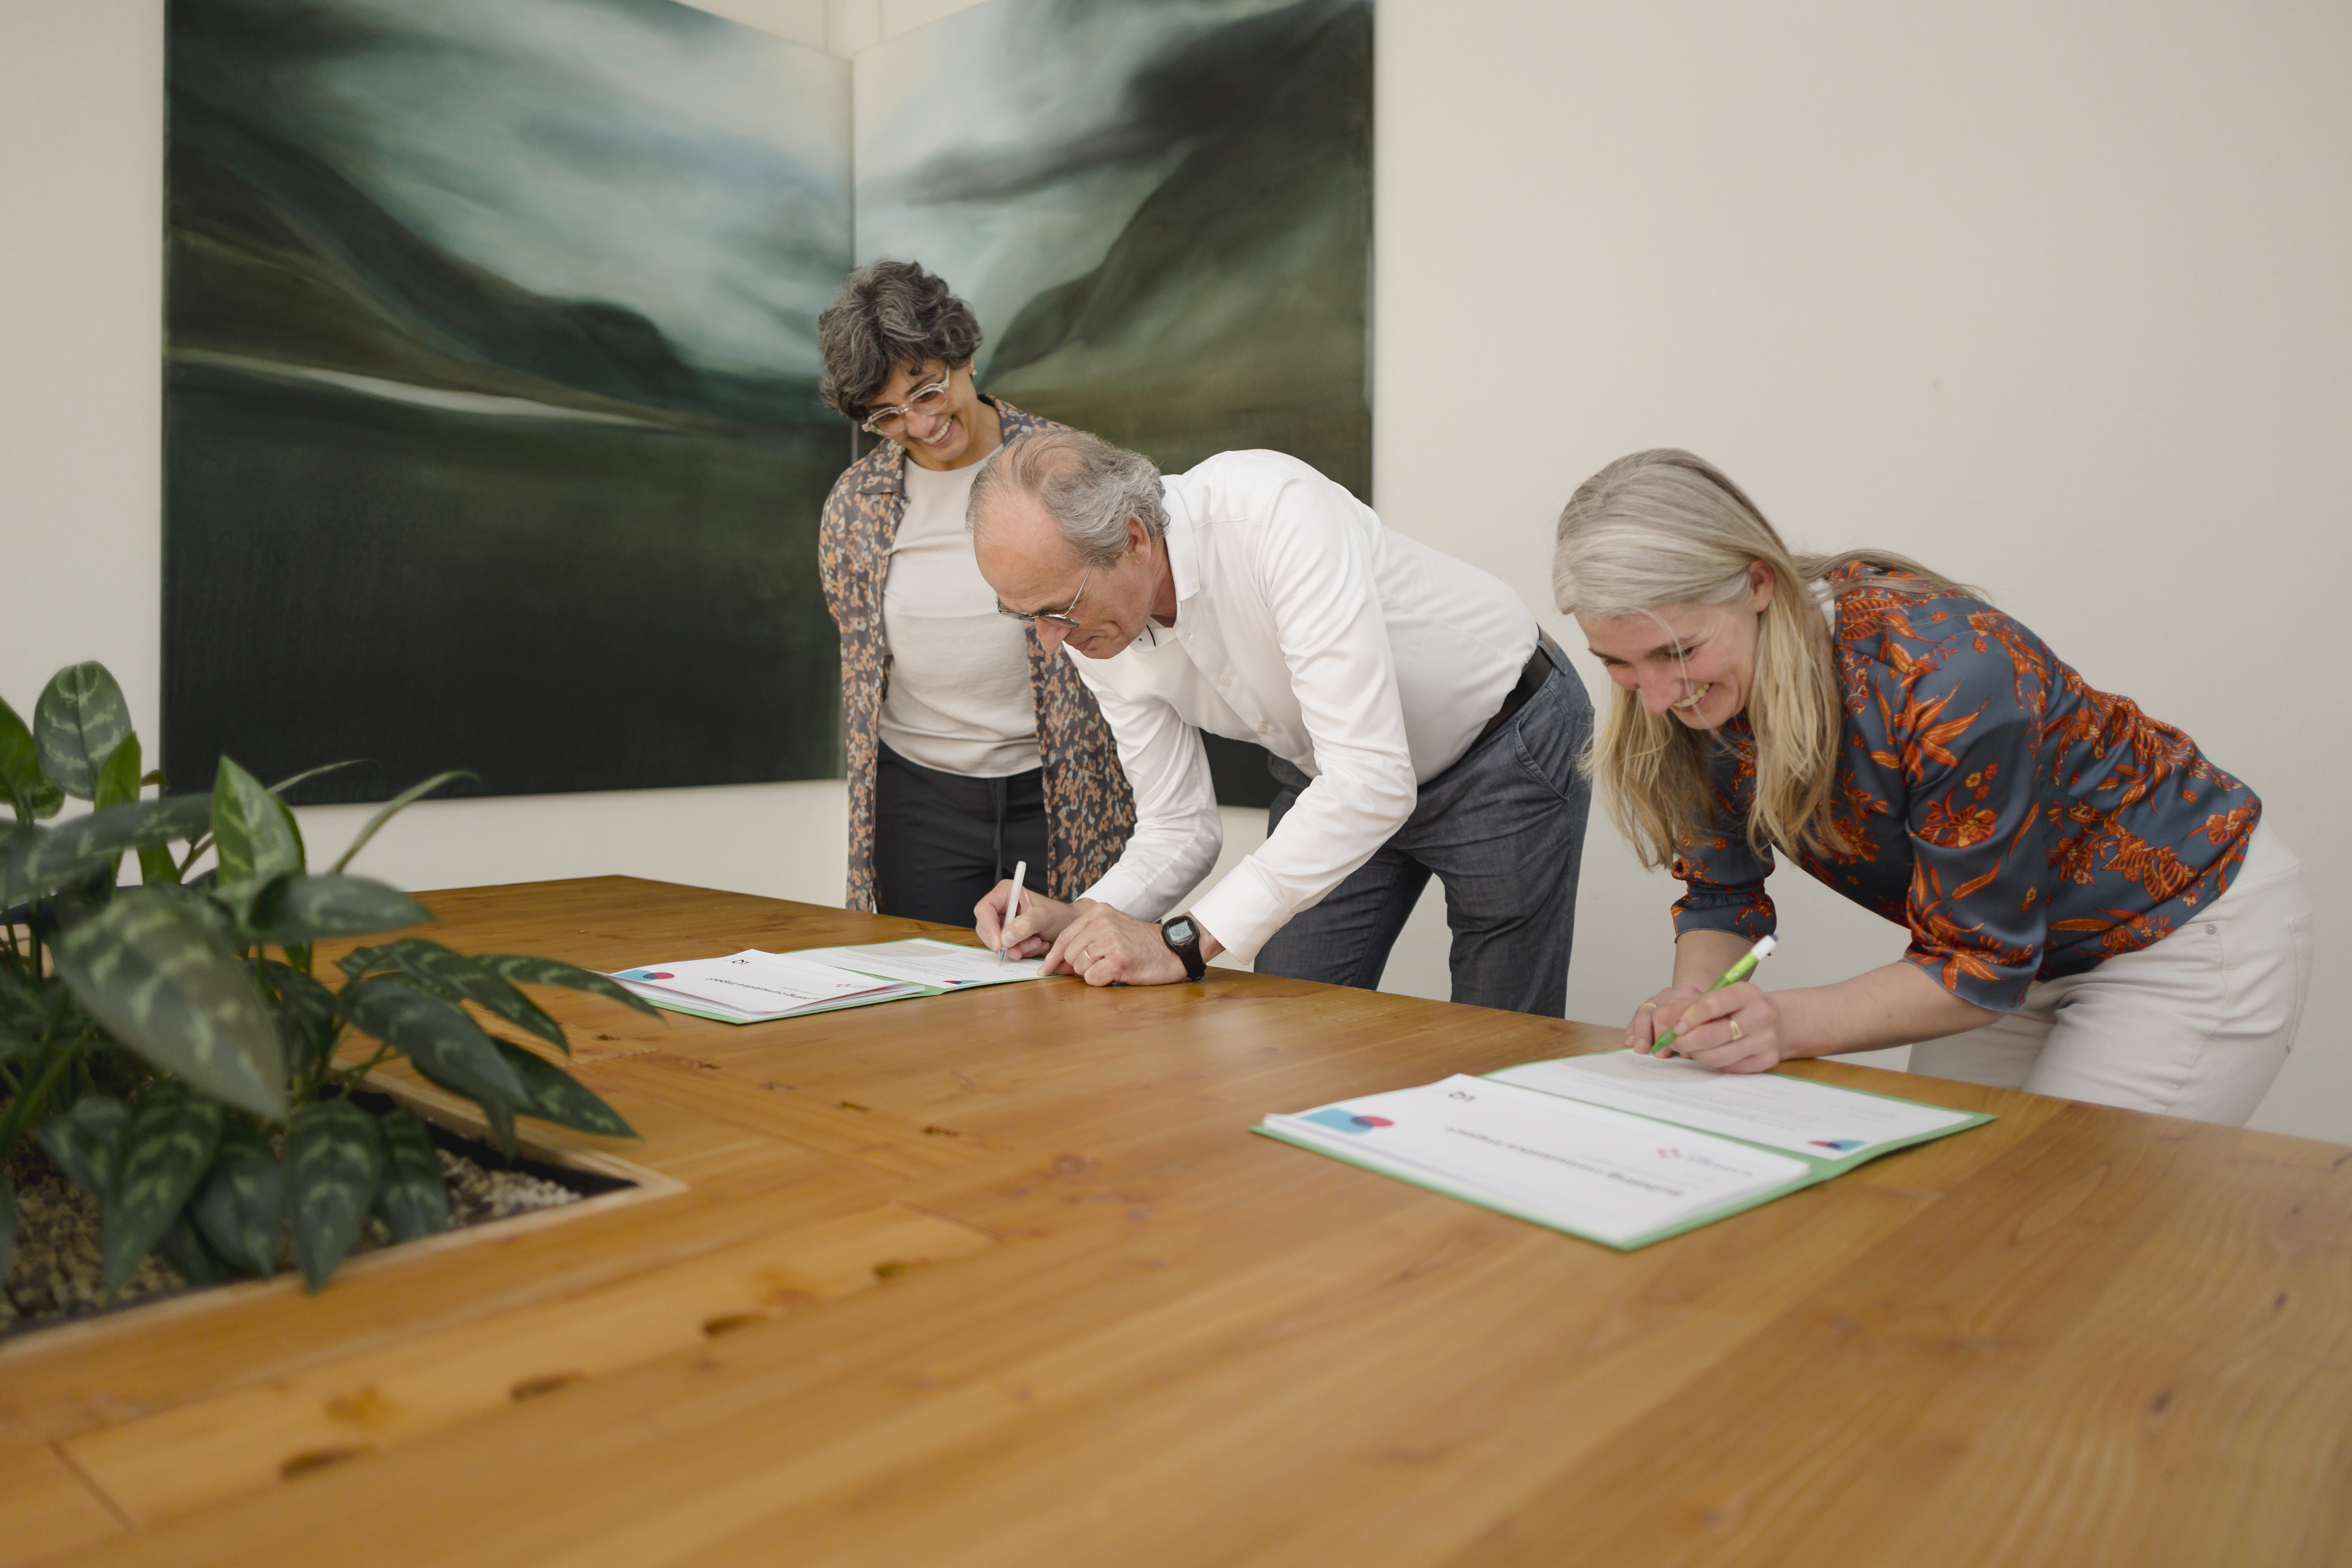 VINCI Energies NL and LQ sign partnership agreement